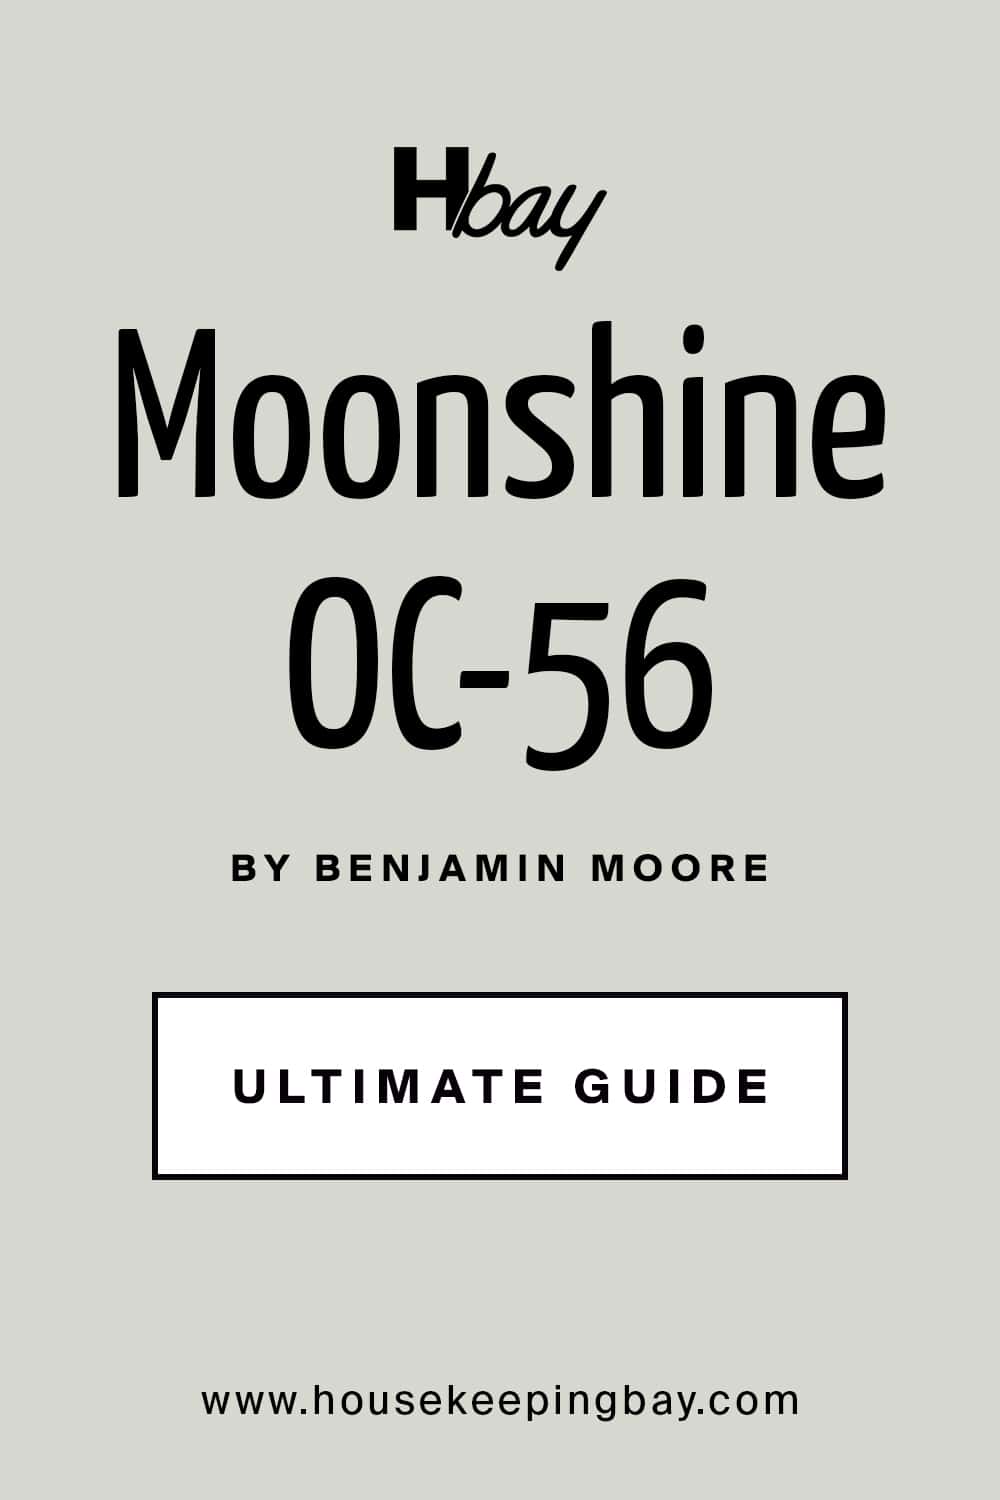 Moonshine OC-56 by Benjamin Moore Ultimate Guide